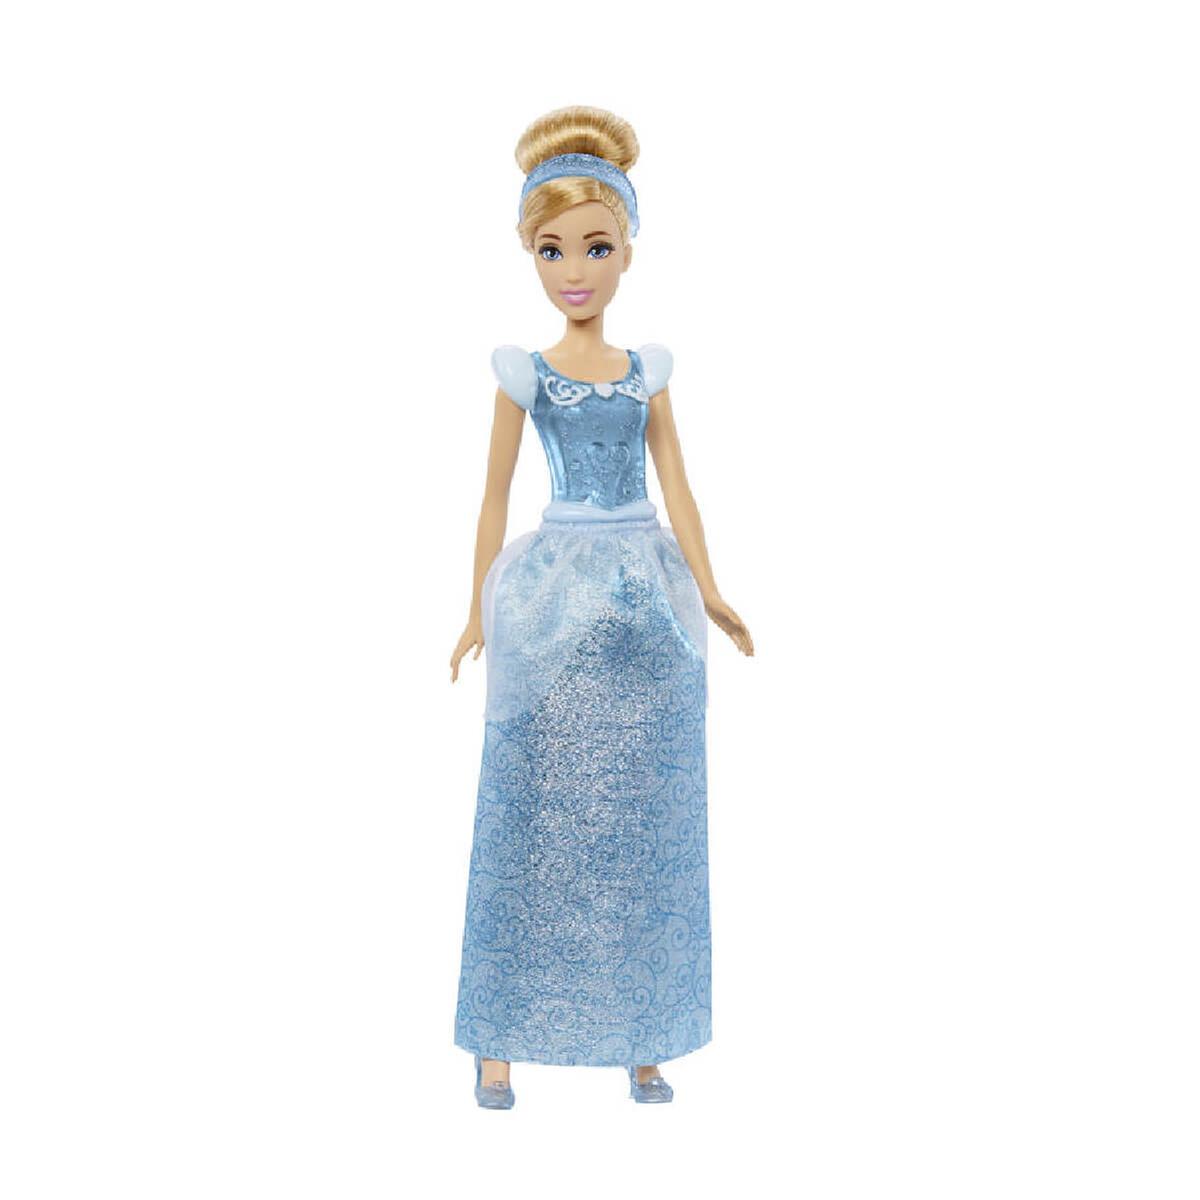 Princesas Disney - Boneca Cinderela | BONECAS PRINCESAS DISNEY & ACESSÓRIOS  | Loja de brinquedos e videojogos Online Toysrus